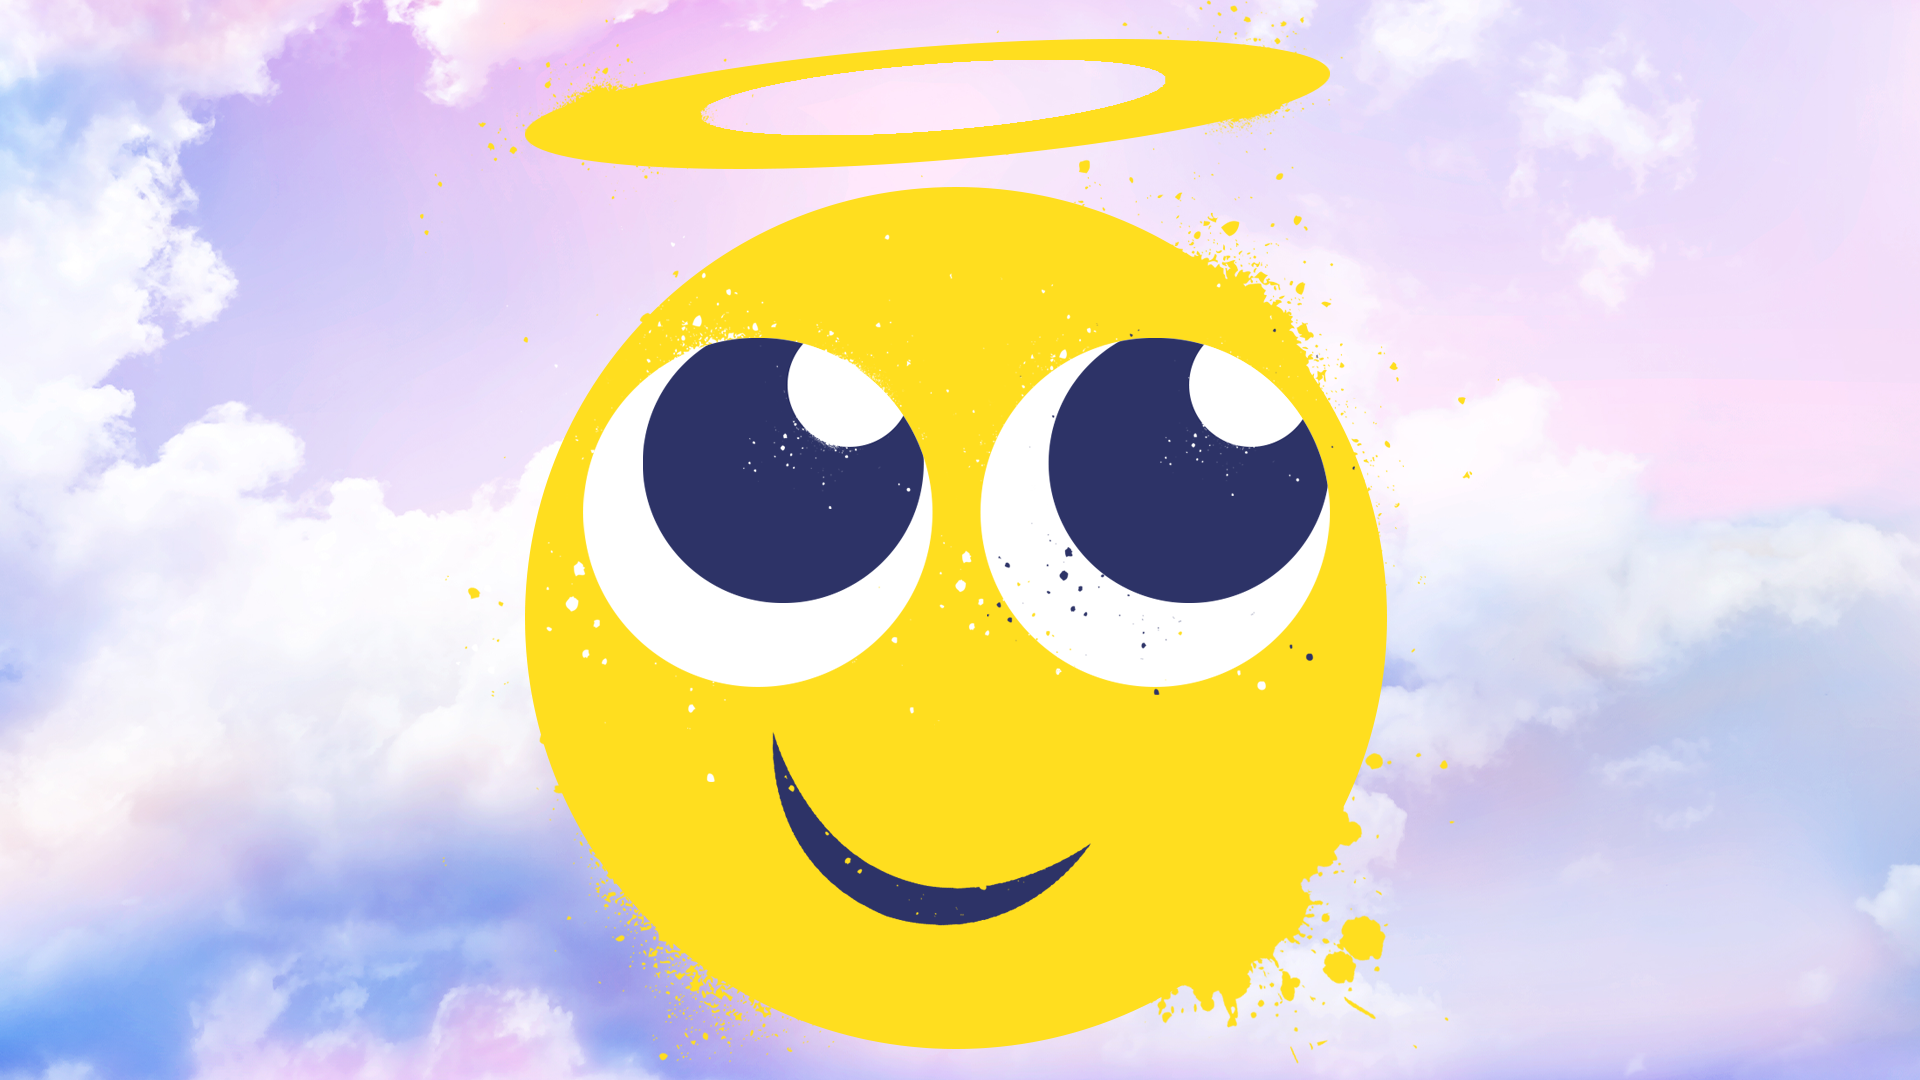 Angel emoji on cloud background